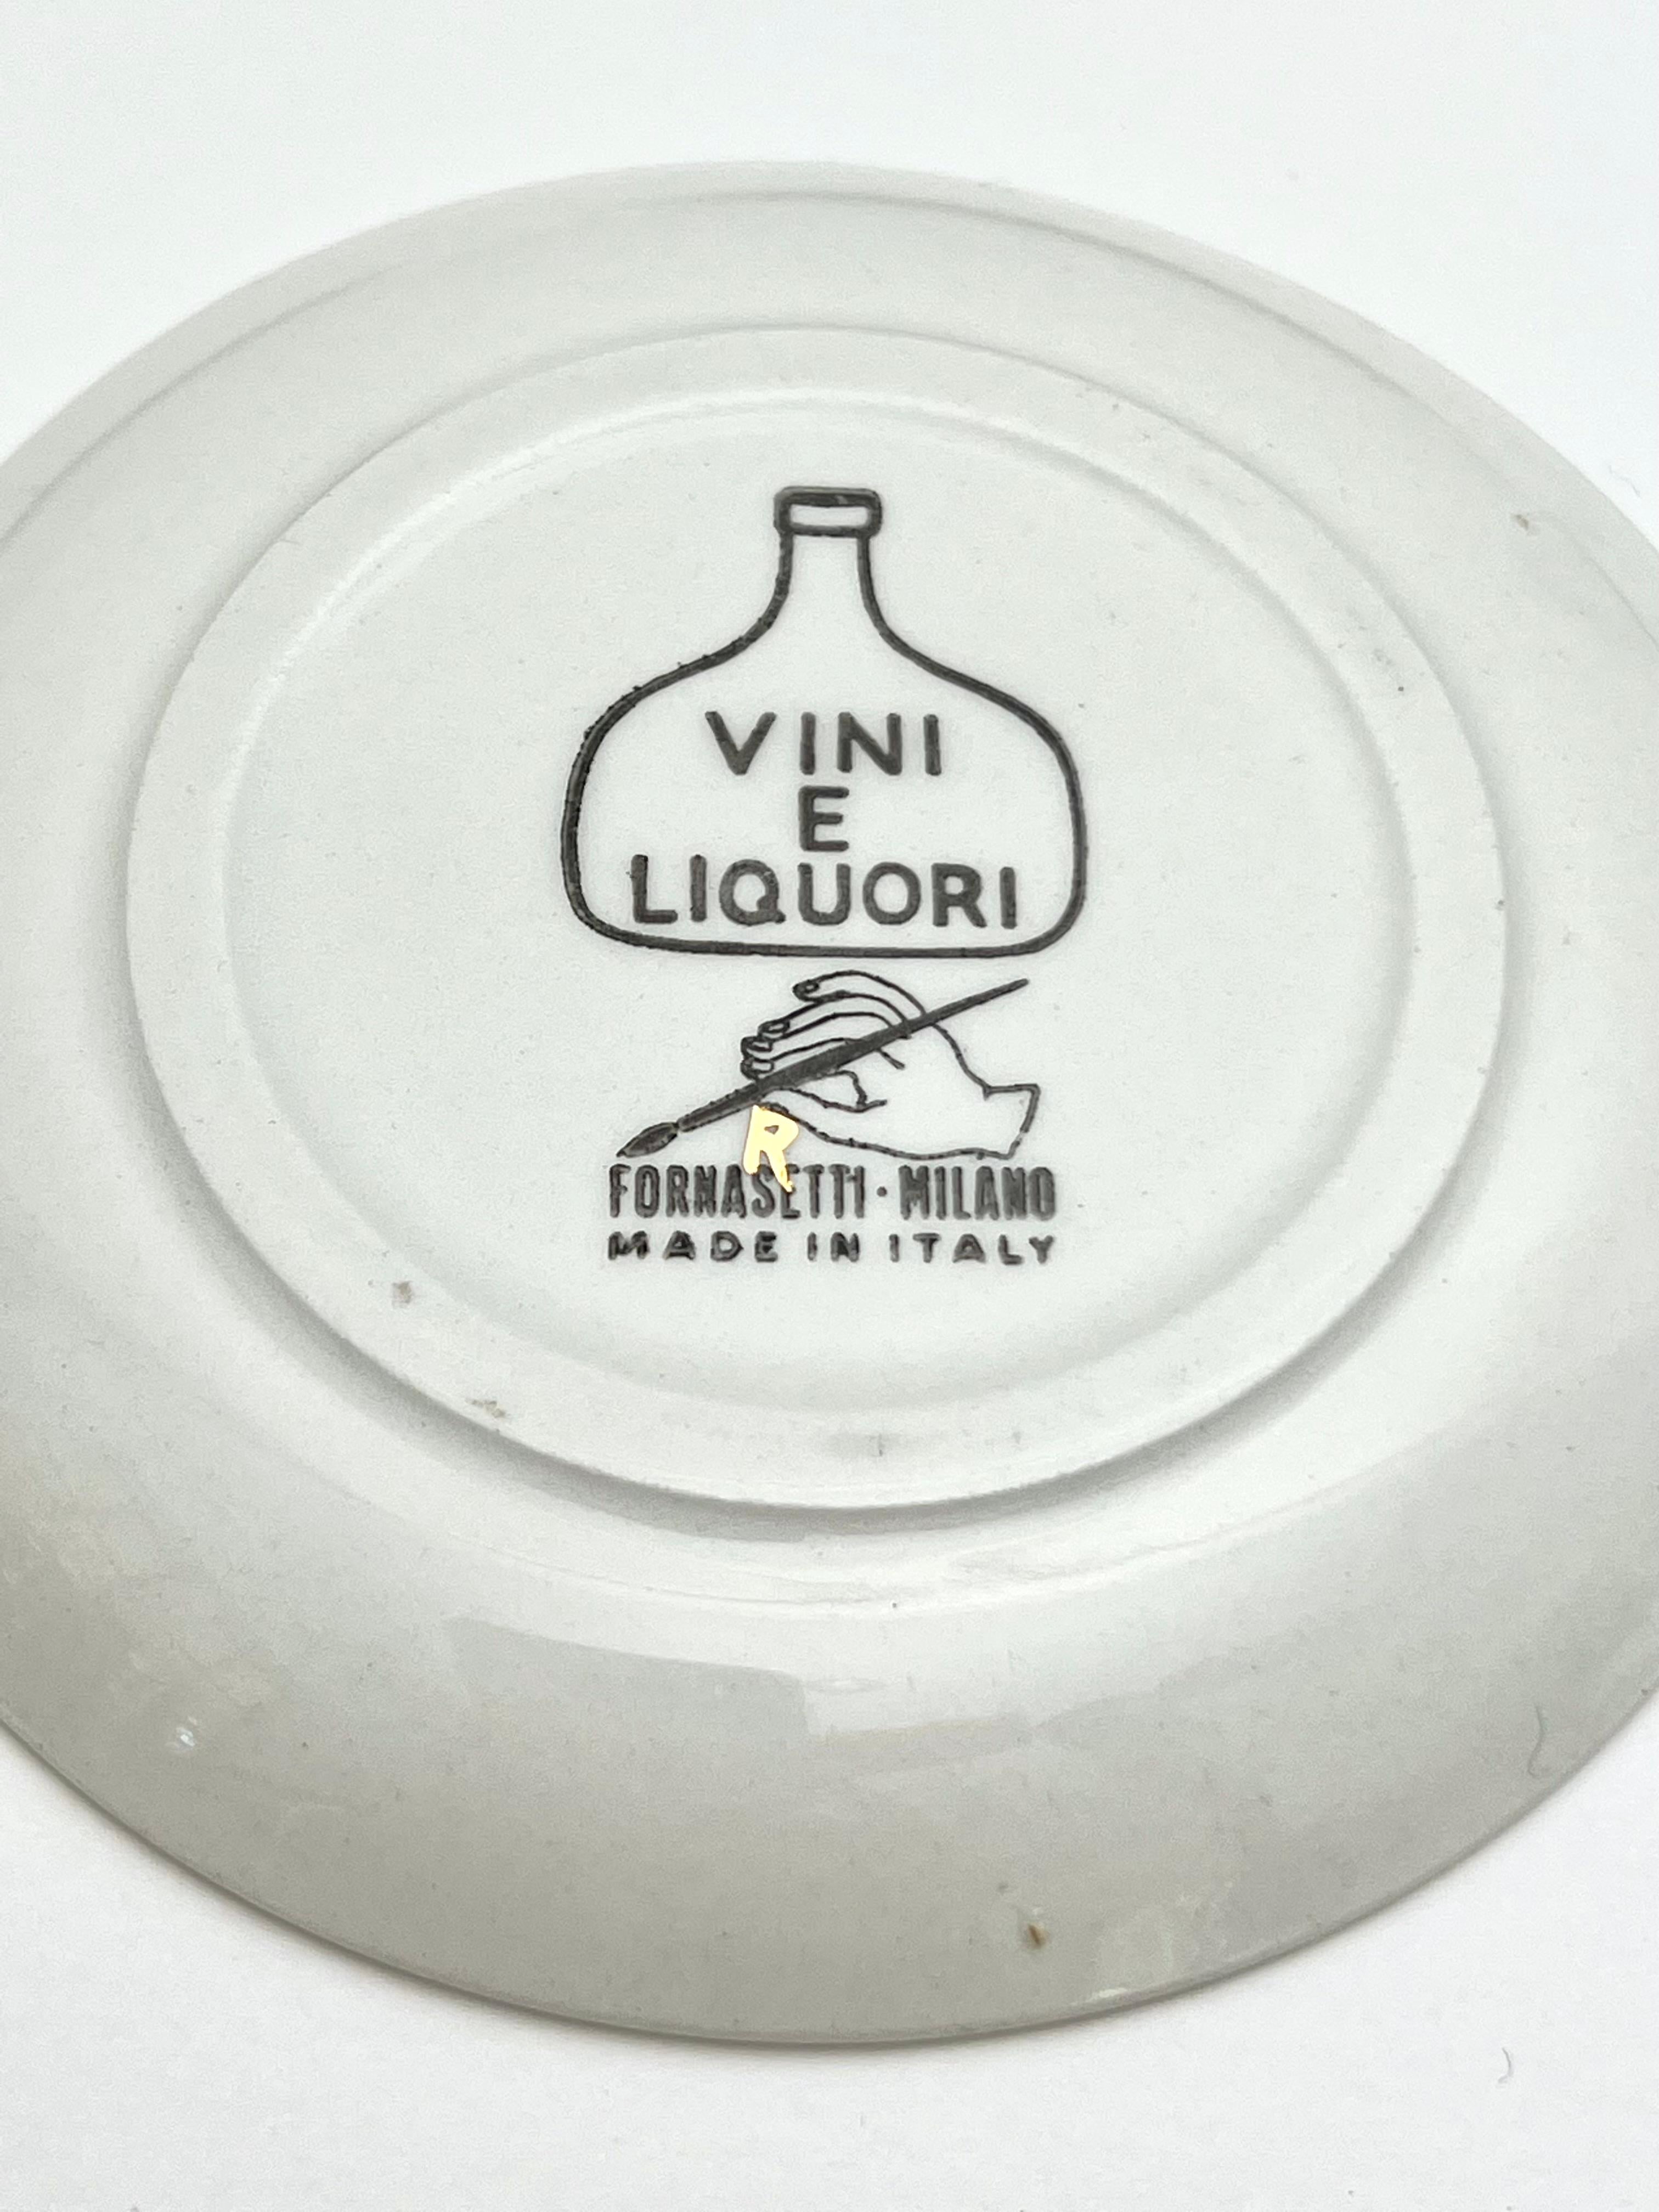 Italian Fornasetti Ceramic Bar Coasters 'Vini e Liquori' For Sale